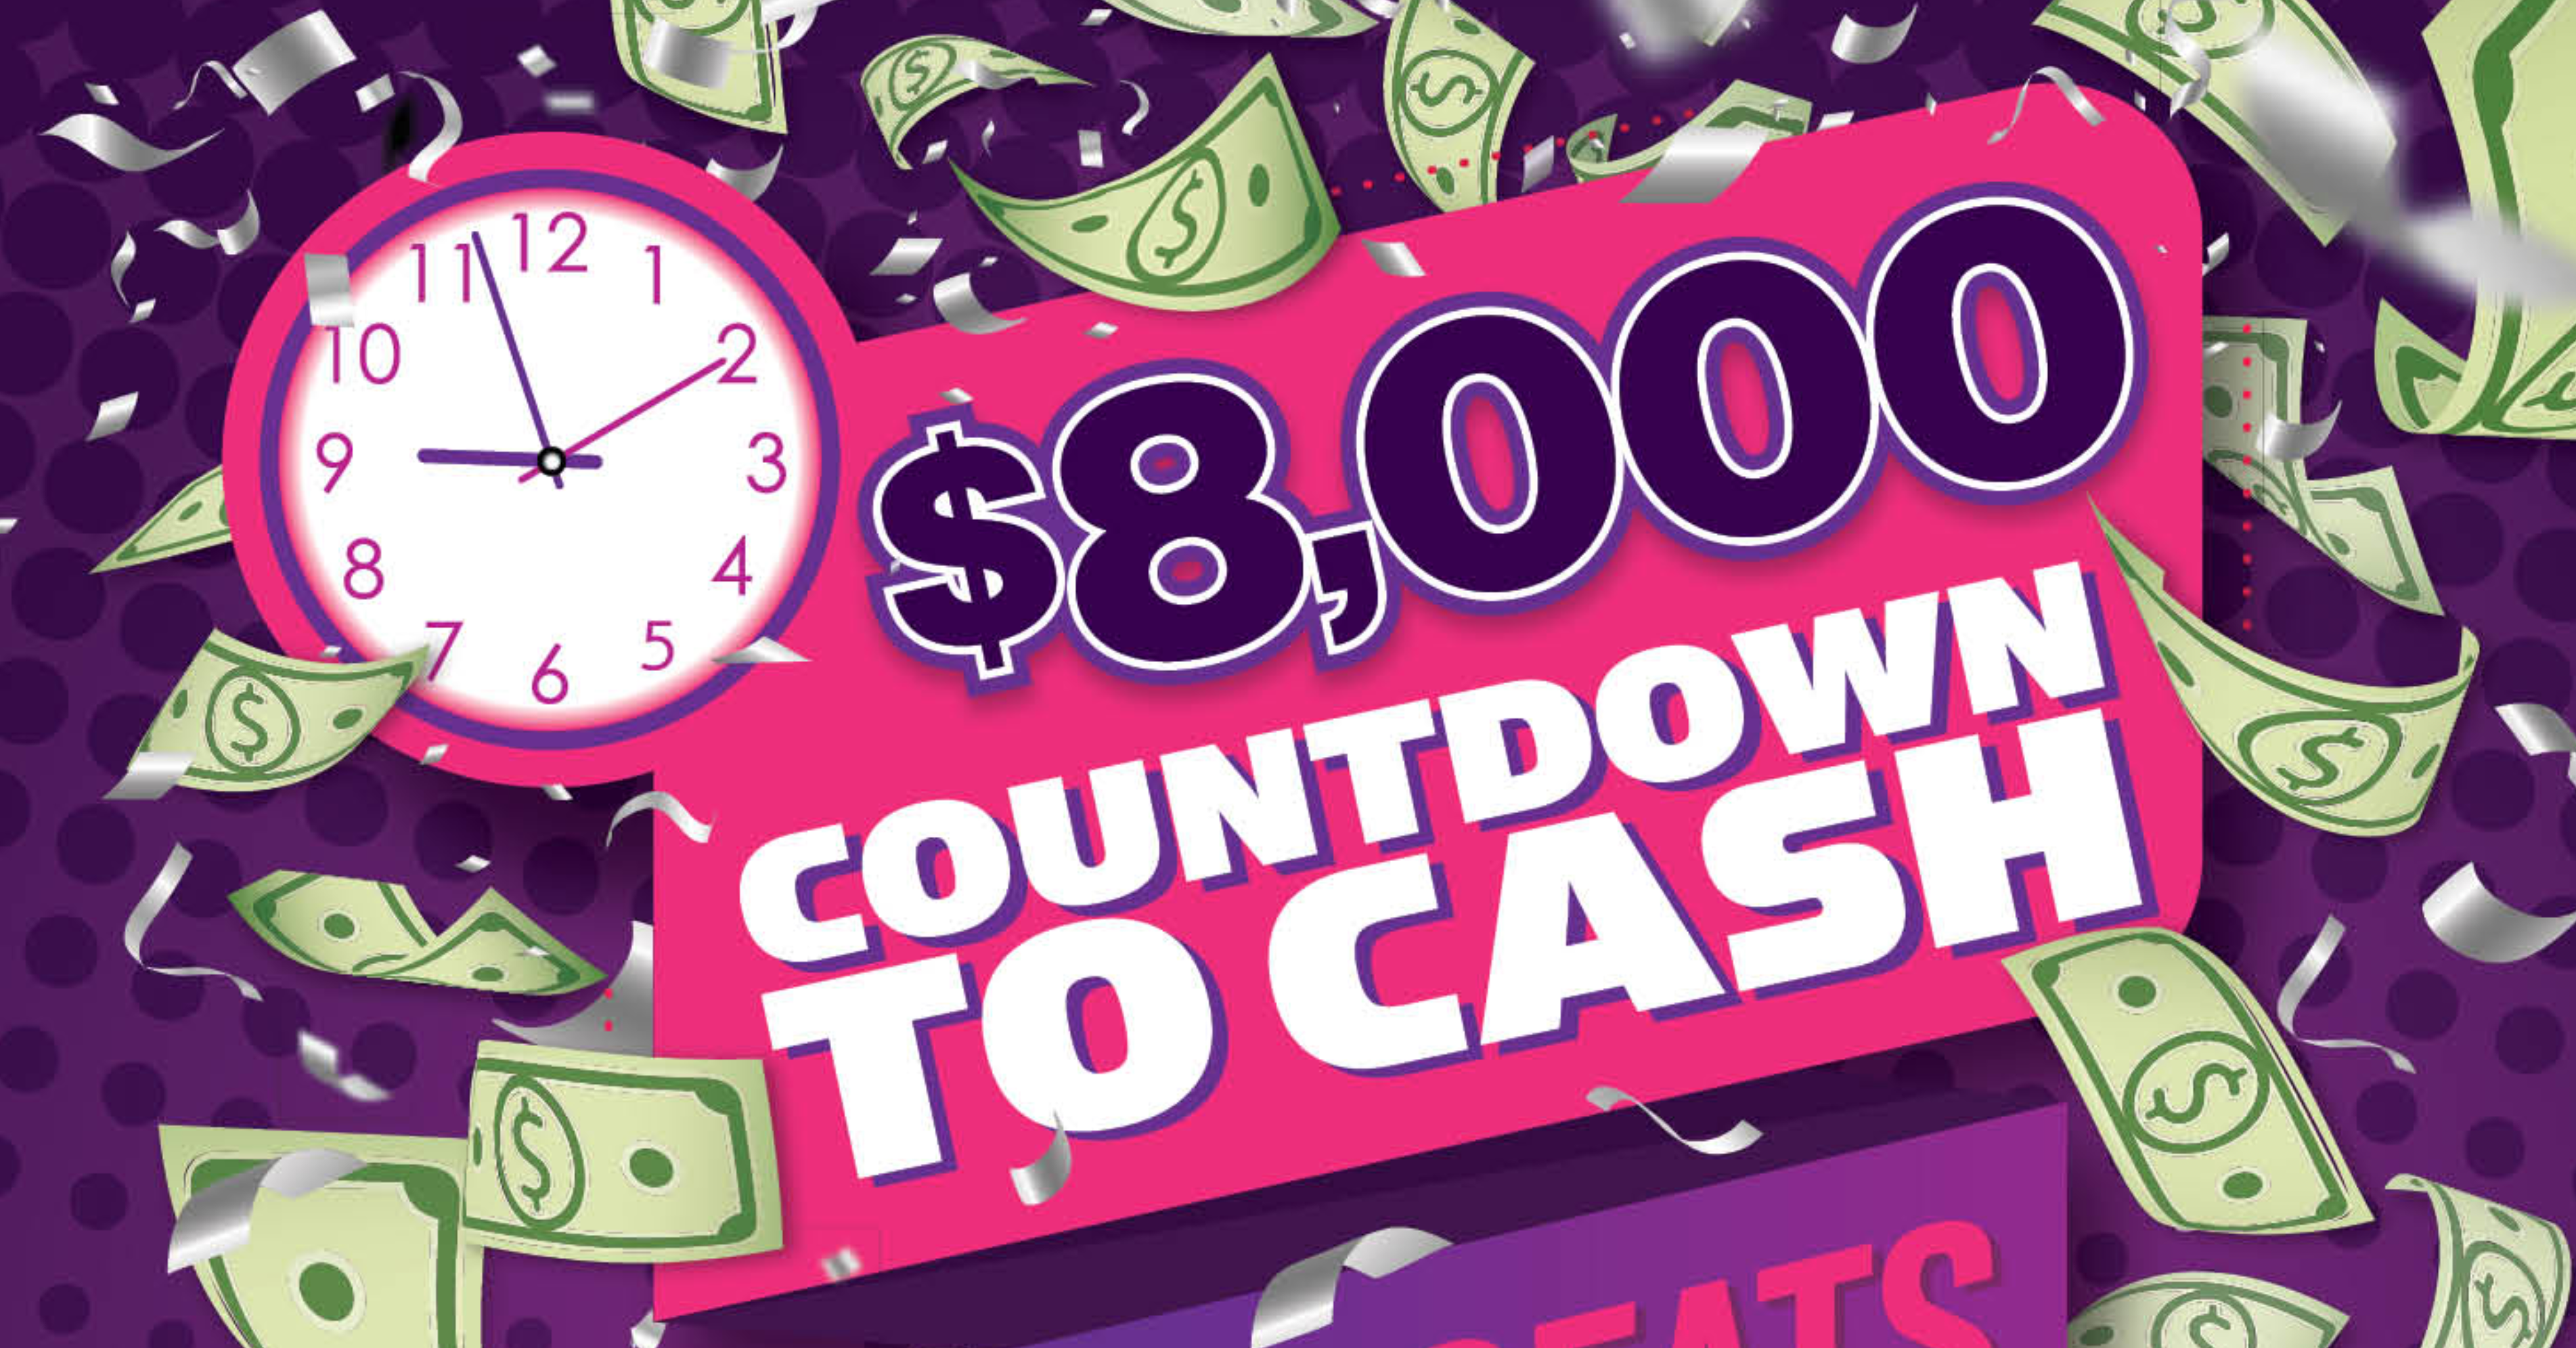 $8,000 Countdown to Cash Hot Seats